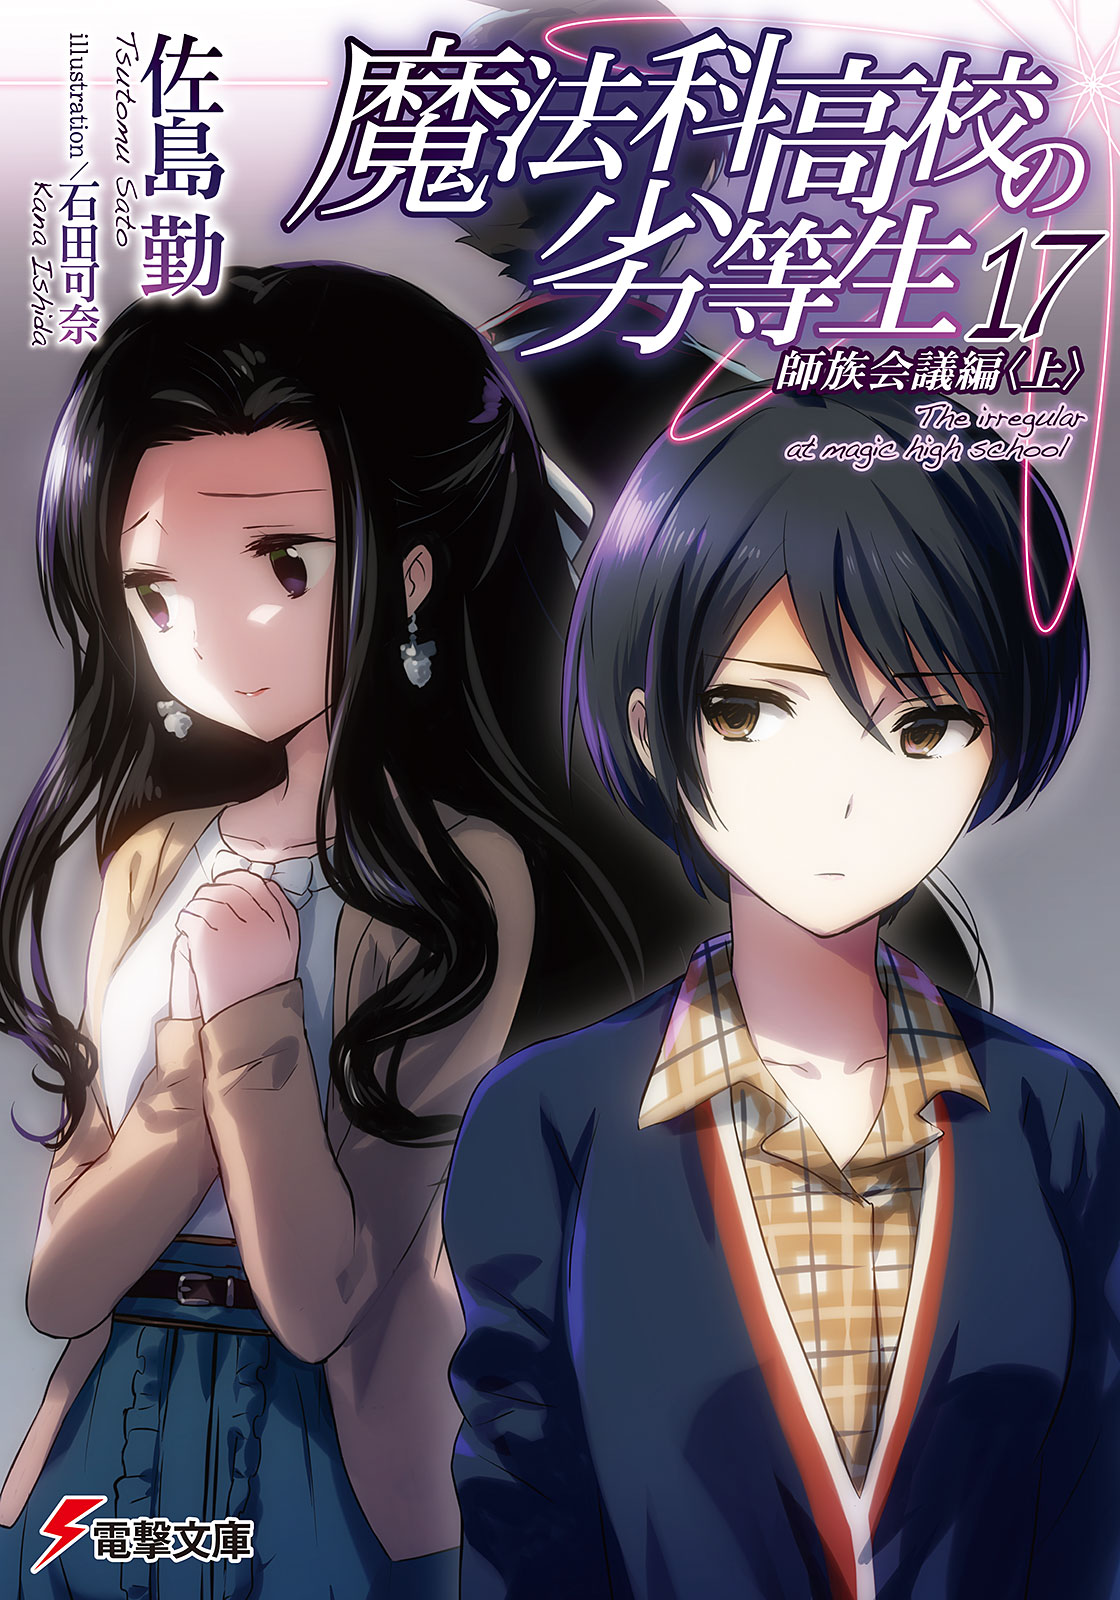 Mahouka Koukou no Yuutousei (Manga) Season 2, Mahouka Koukou no Rettousei  Wiki